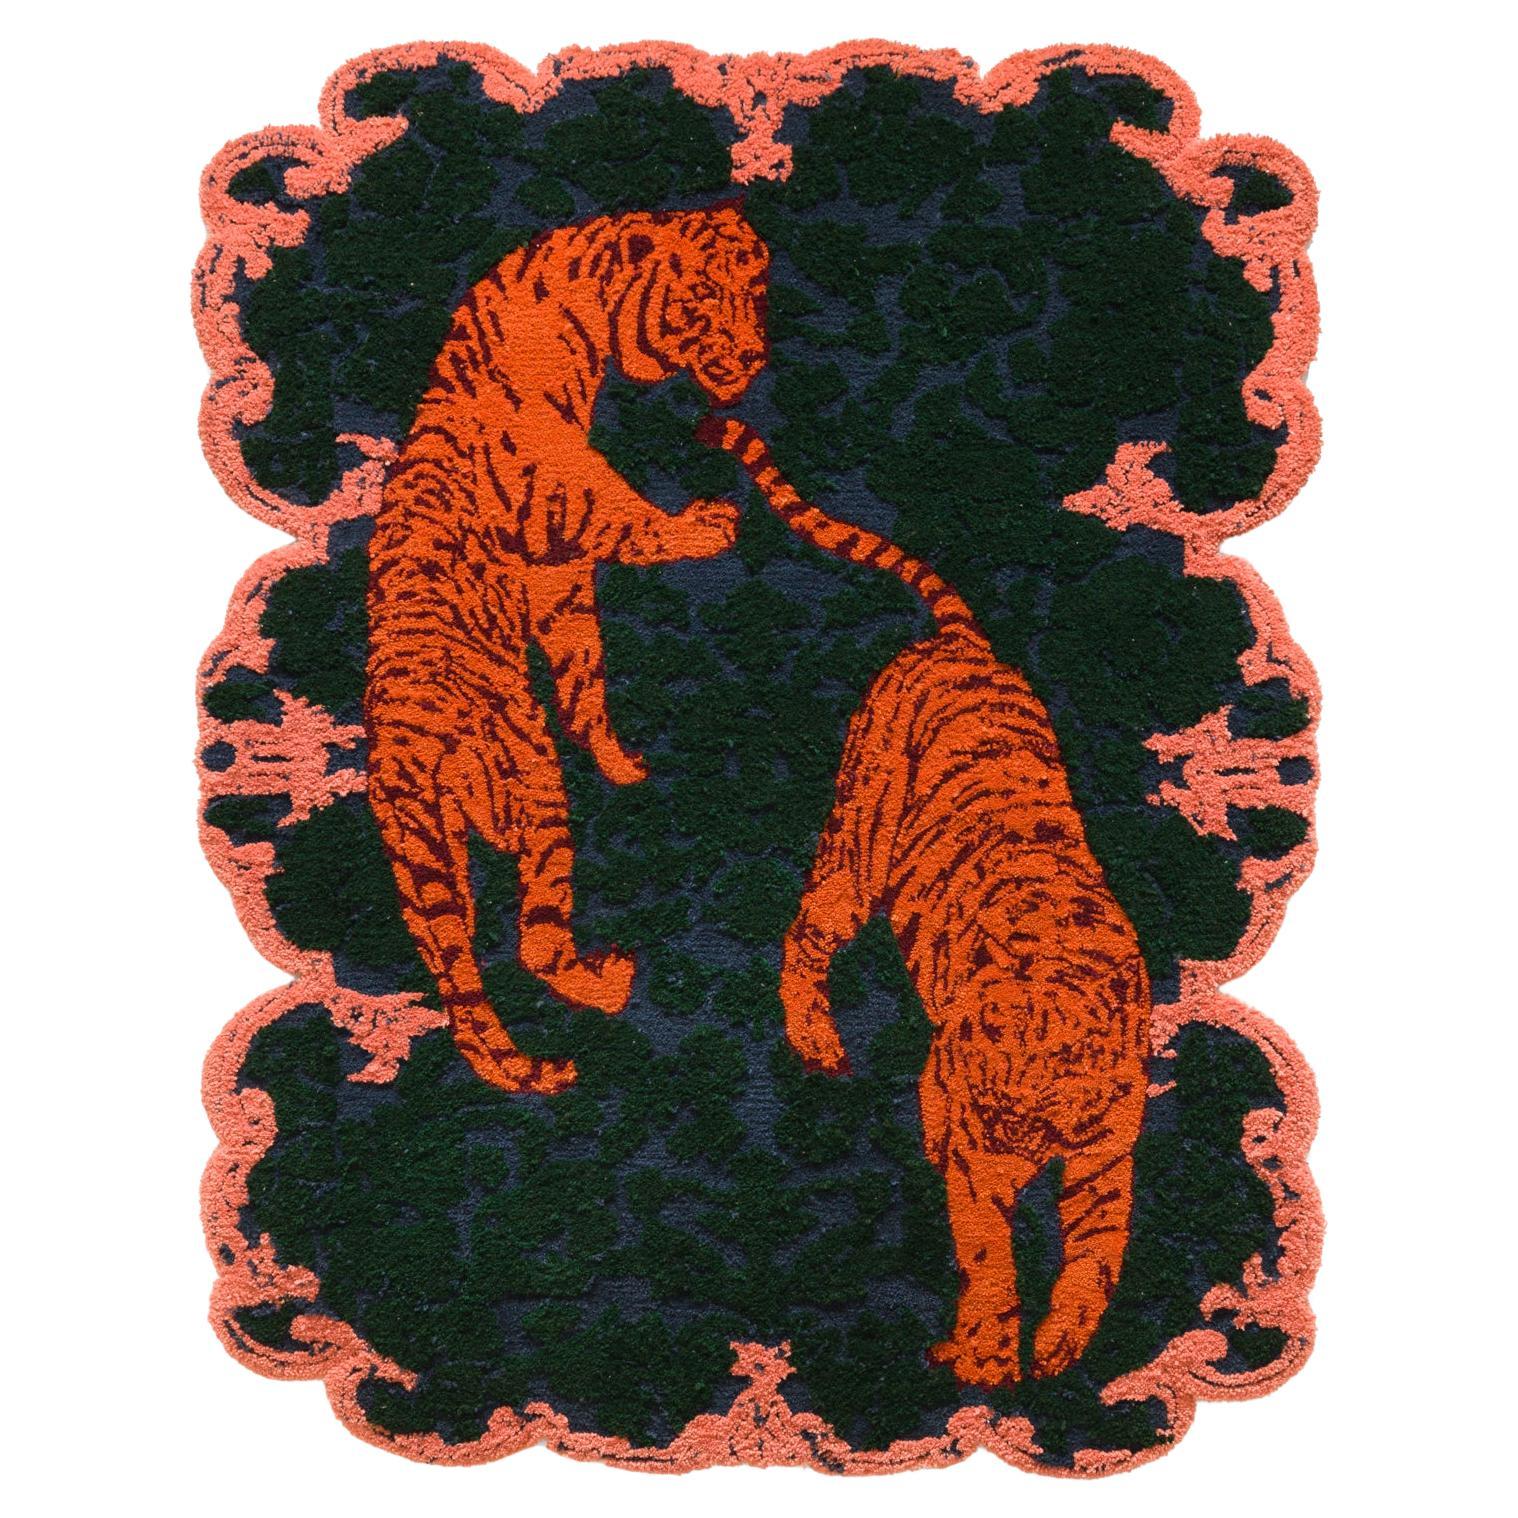 Tapis tigre orange, bleu, vert et rose, collaboration d'artiste et d'atelier en vente